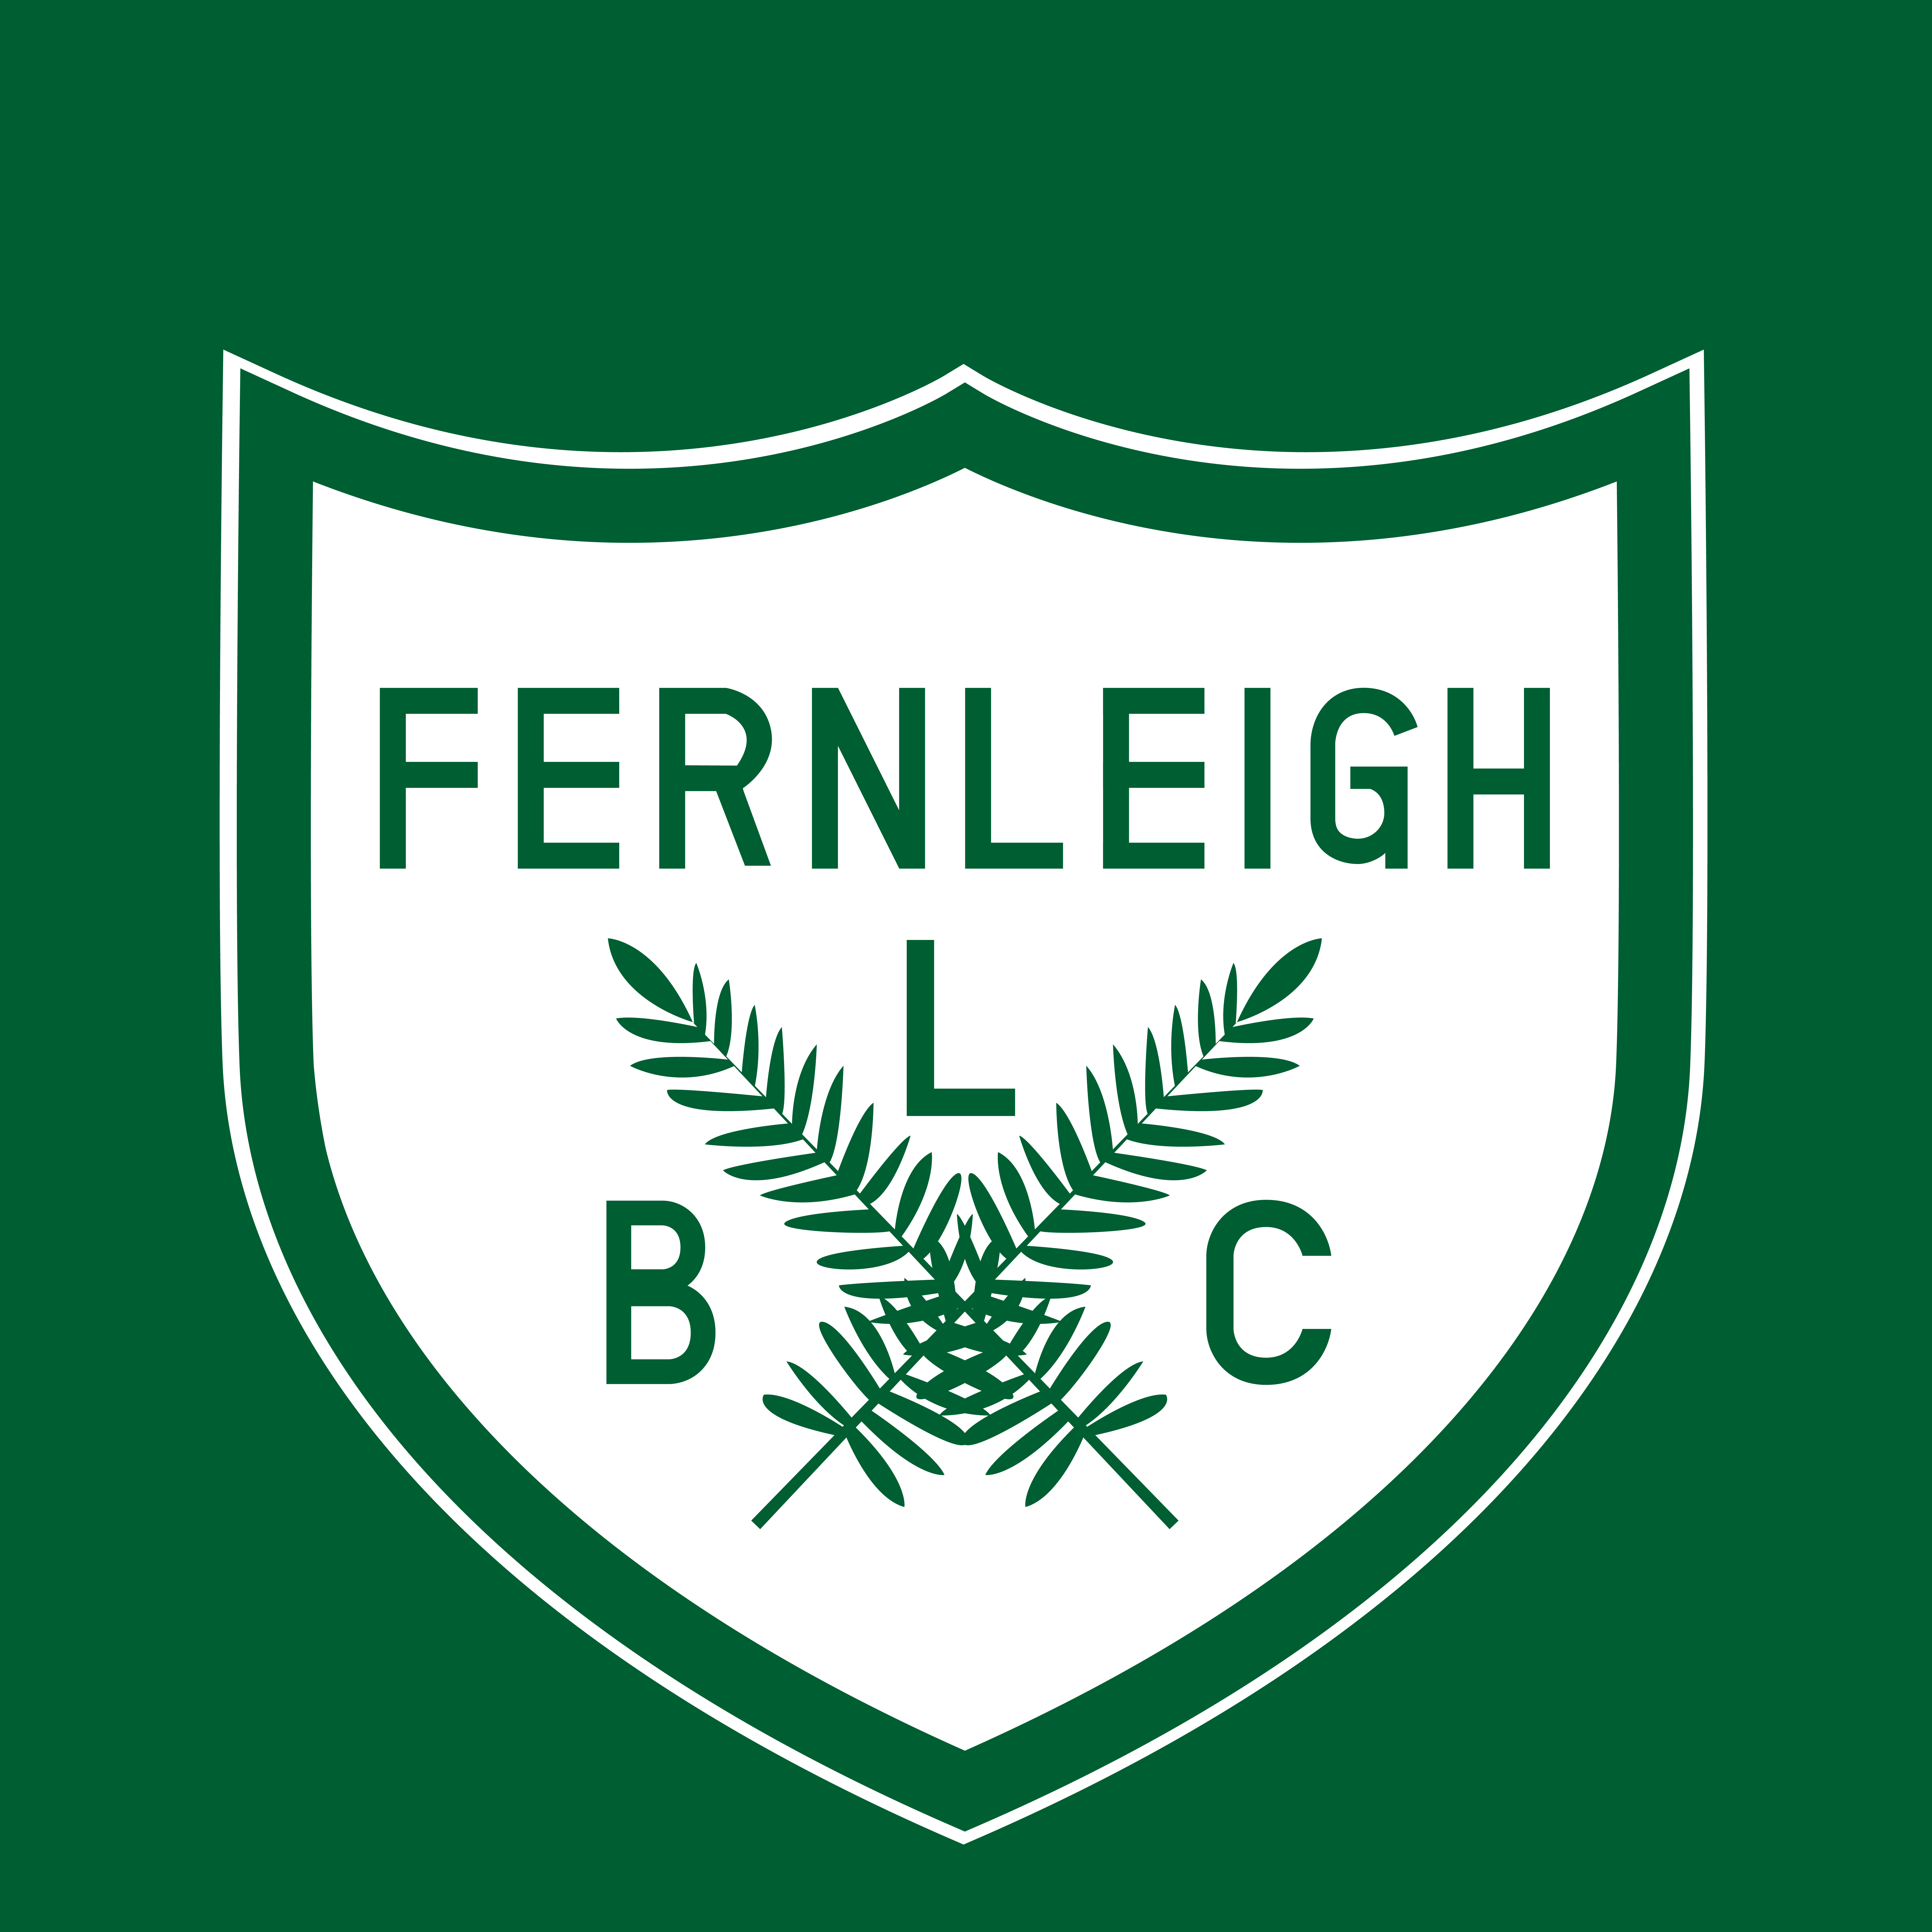 Fernleigh logo